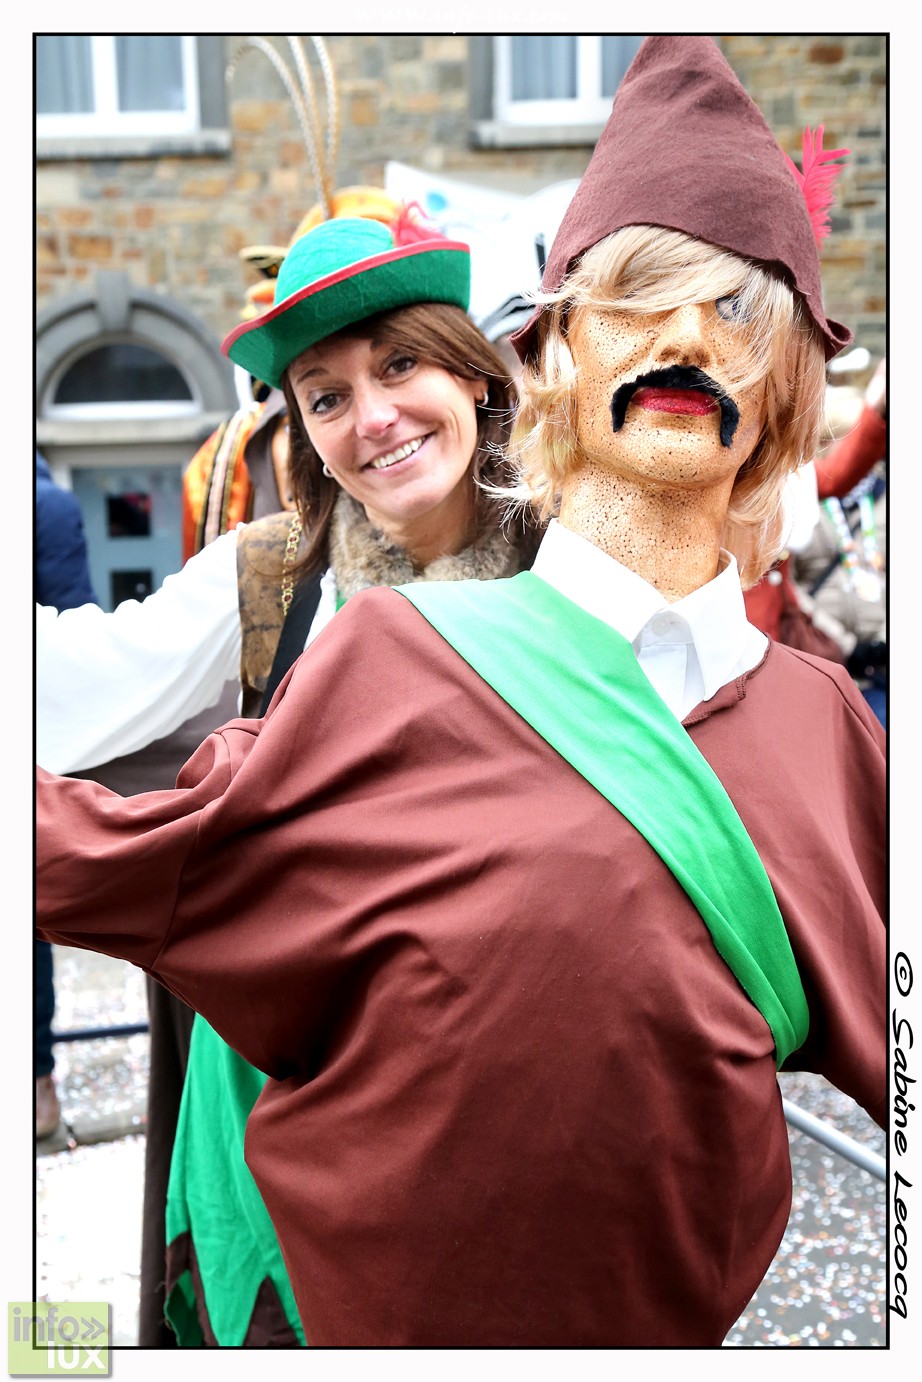 images/stories/PHOTOSREP/La-Roche-en-Ardenne/Carnaval2/Carnaval-larocheb095